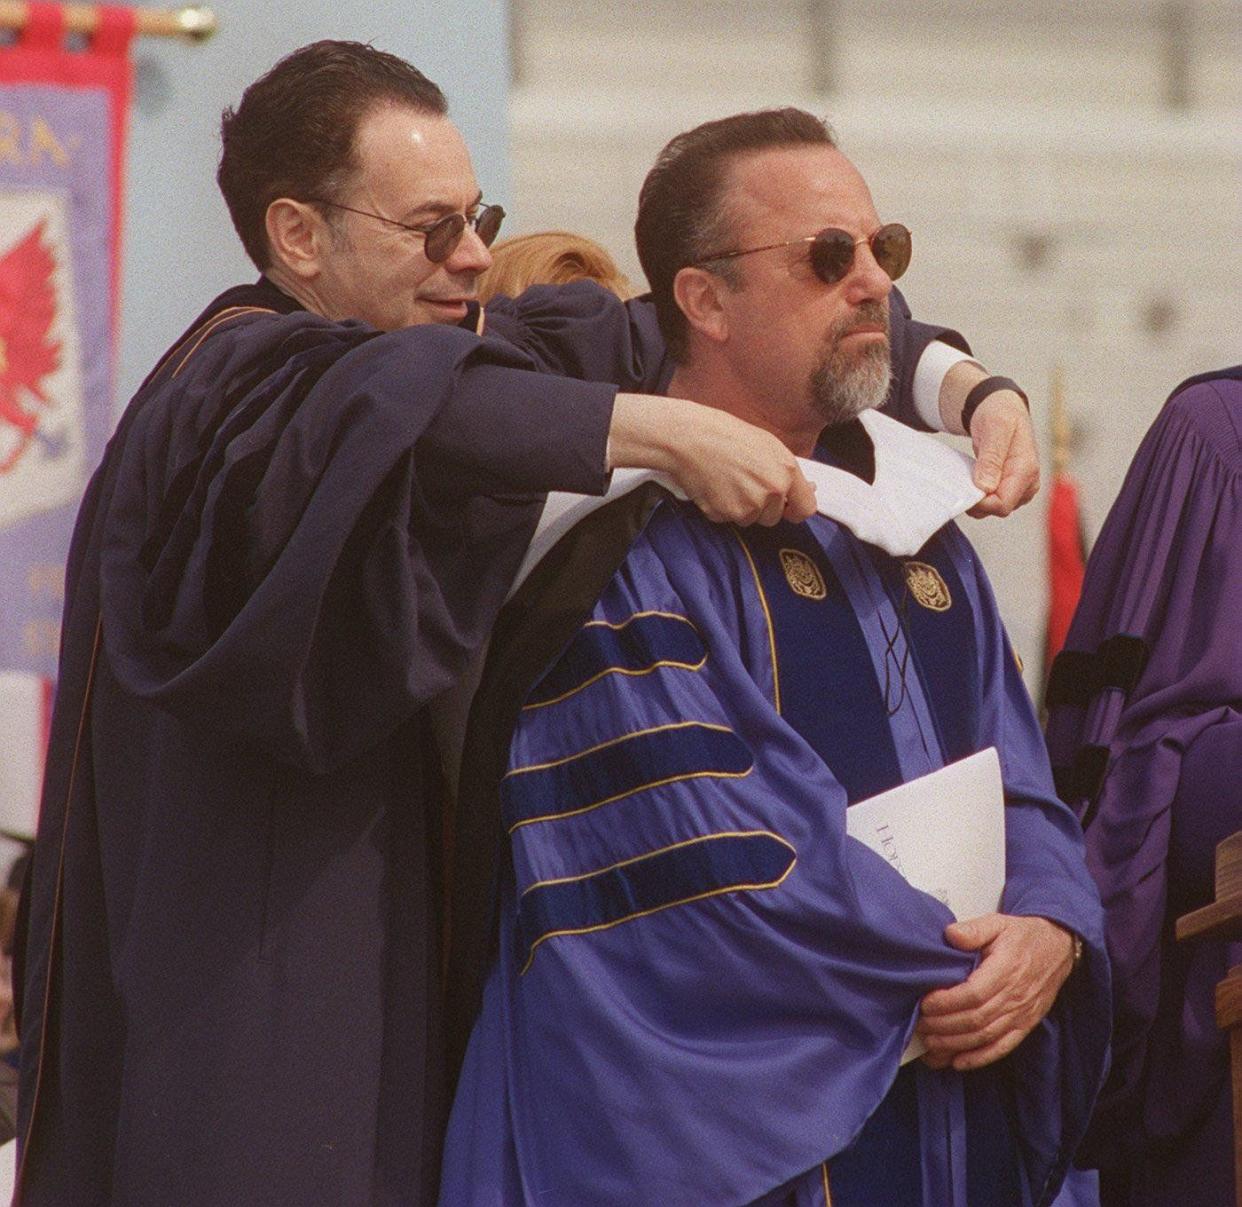 billy joel receives honorary degree from hofstra university, 1997